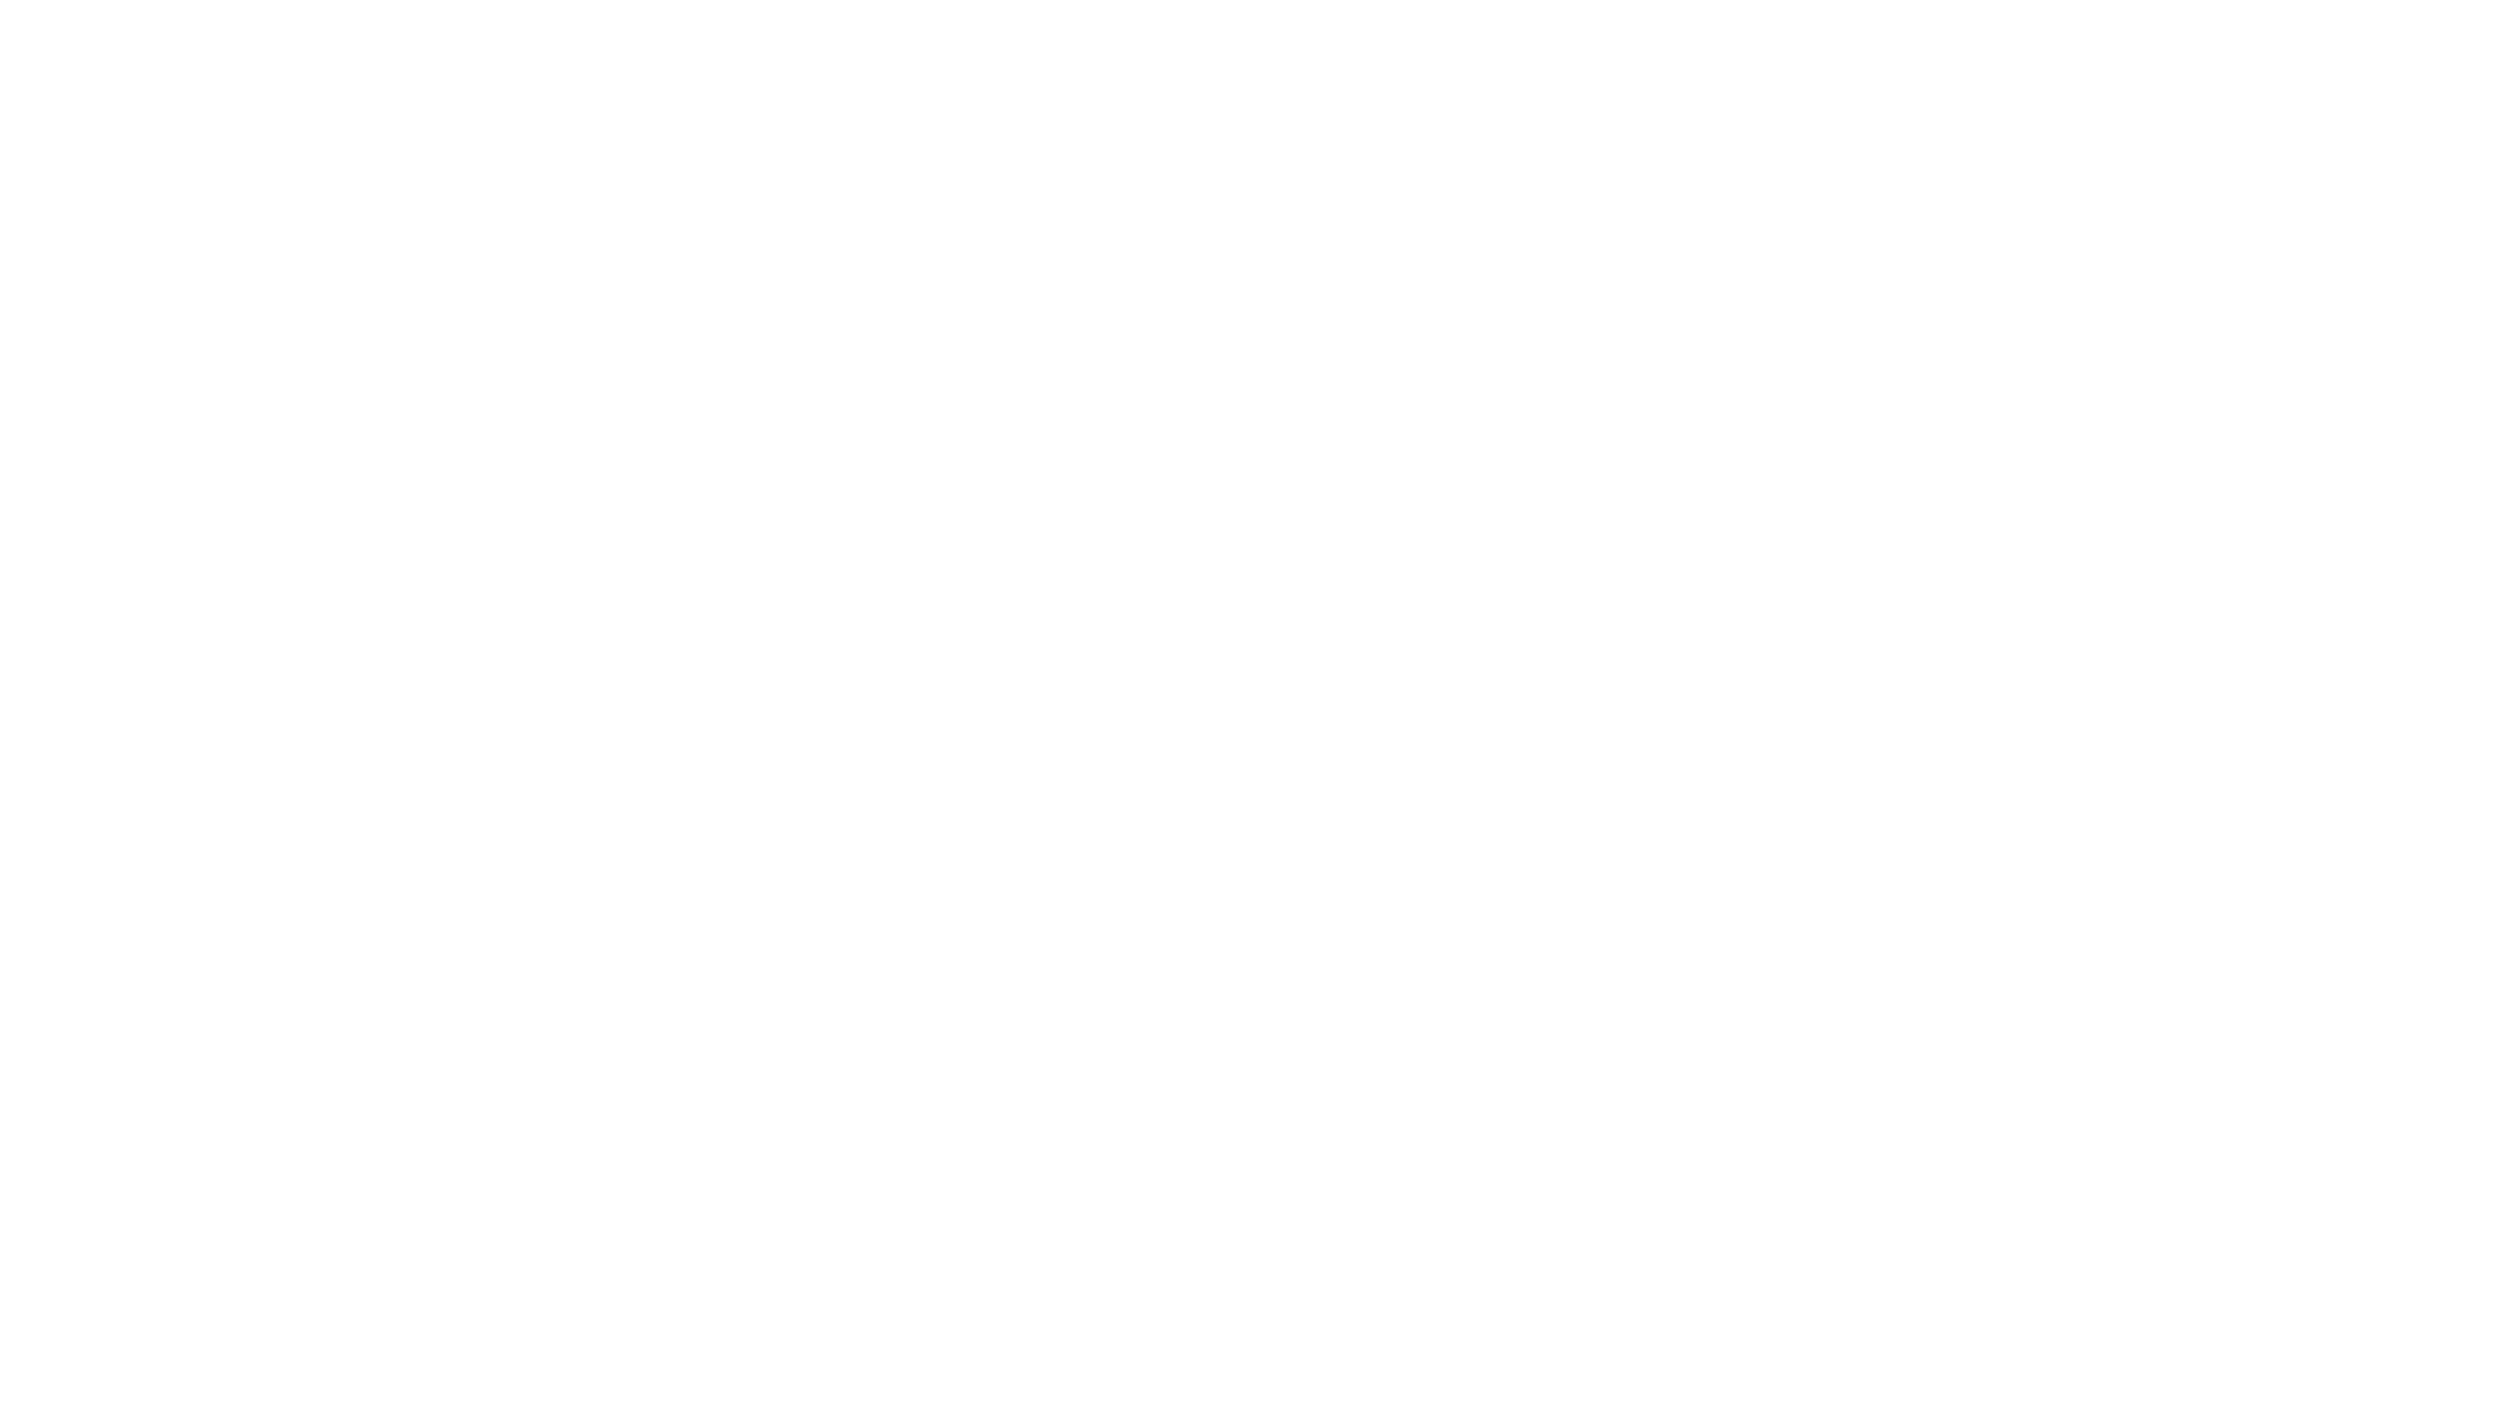 fad Udstyr verden Kappa Phi Epsilon